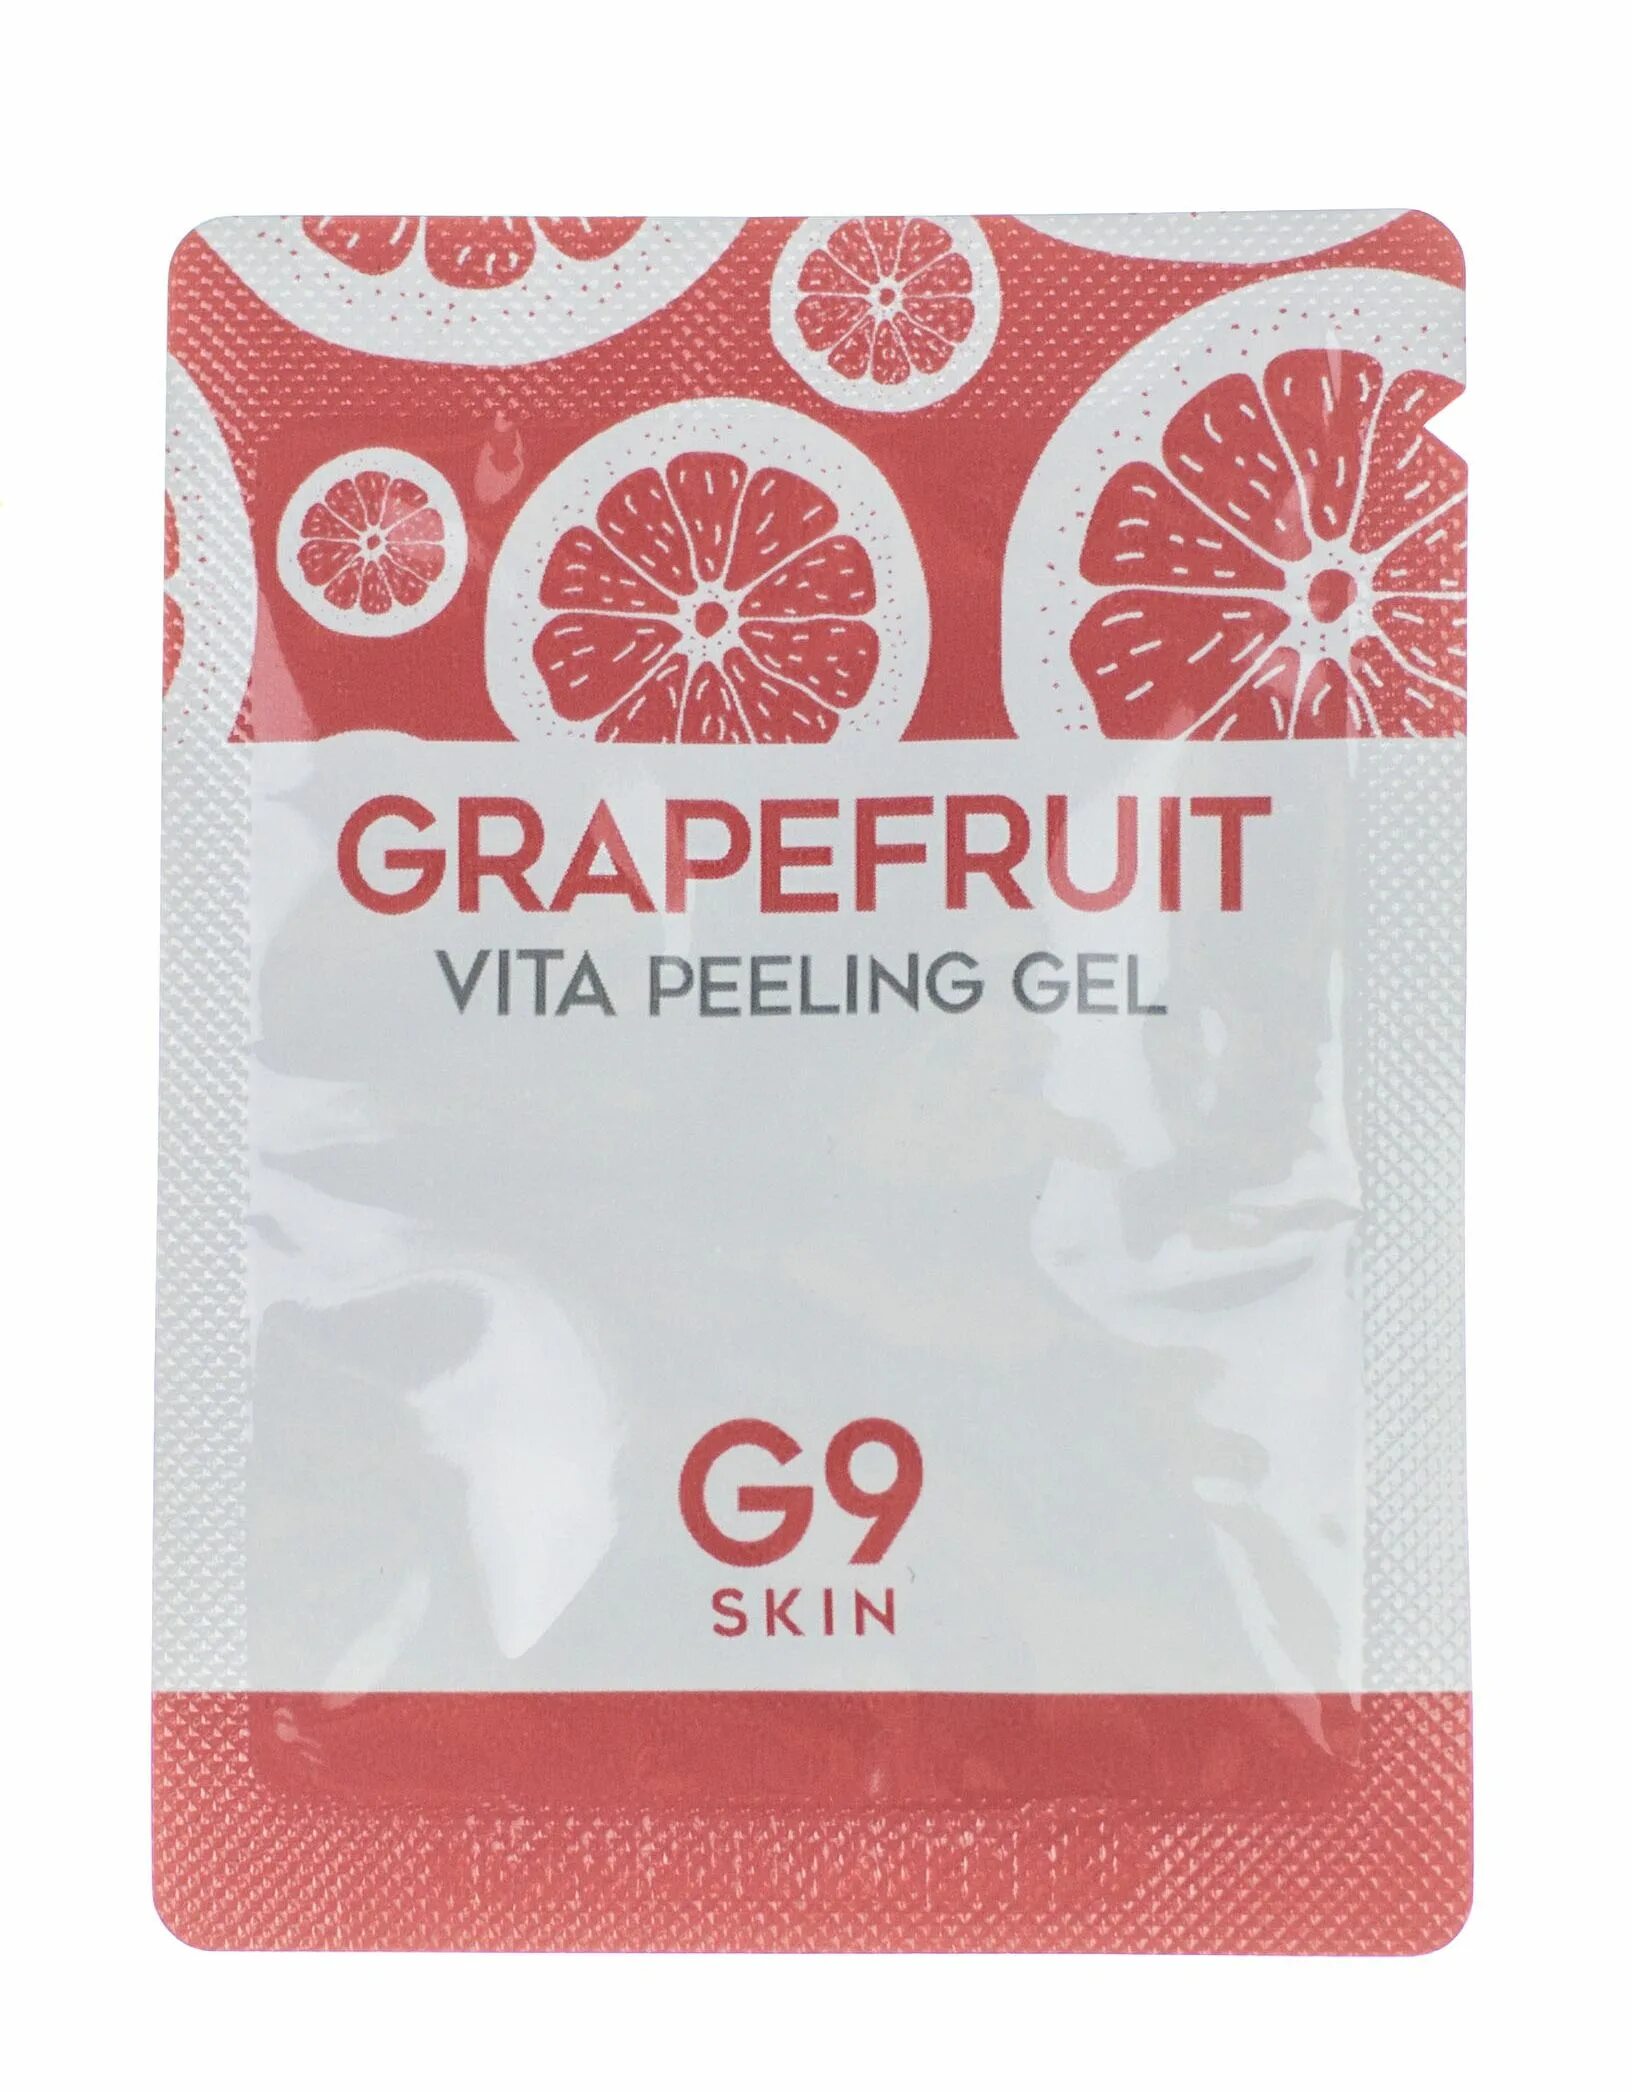 G9 Grapefruit гель для лица пробник g9 Grapefruit Vita peeling Gel Pouch 2мл. G9skin пилинг-гель для лица Grapefruit Vita peeling Gel. Грейпфрутовый пилинг-скатка g9skin Grapefruit Vita peeling Gel. G9 Skin пилинг грейпфрут. 9 skin